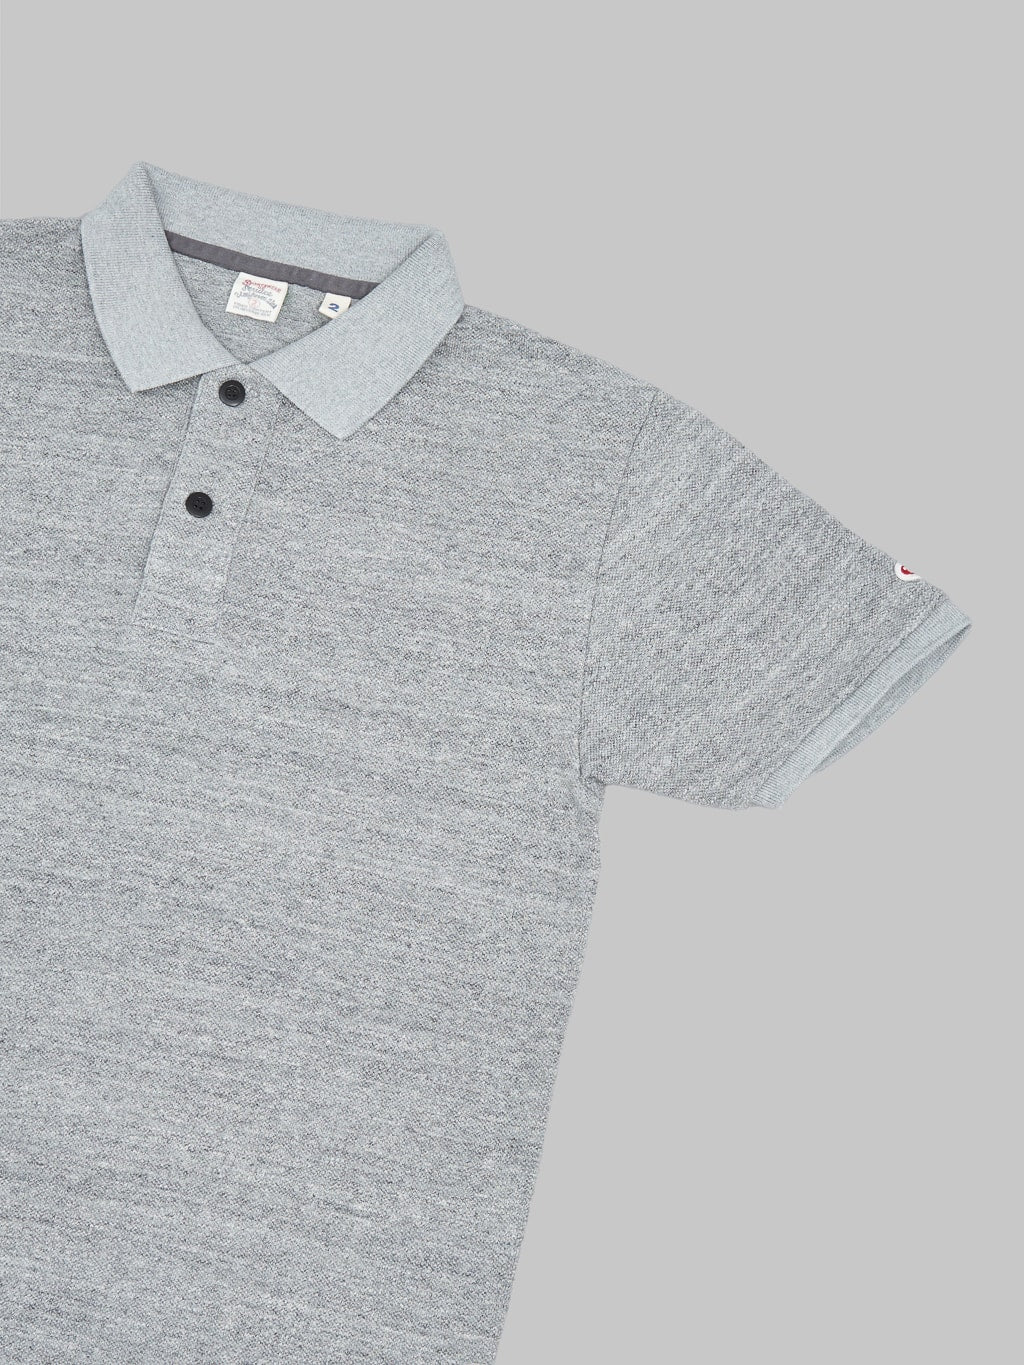 ues polo shirt grey sleeve detail